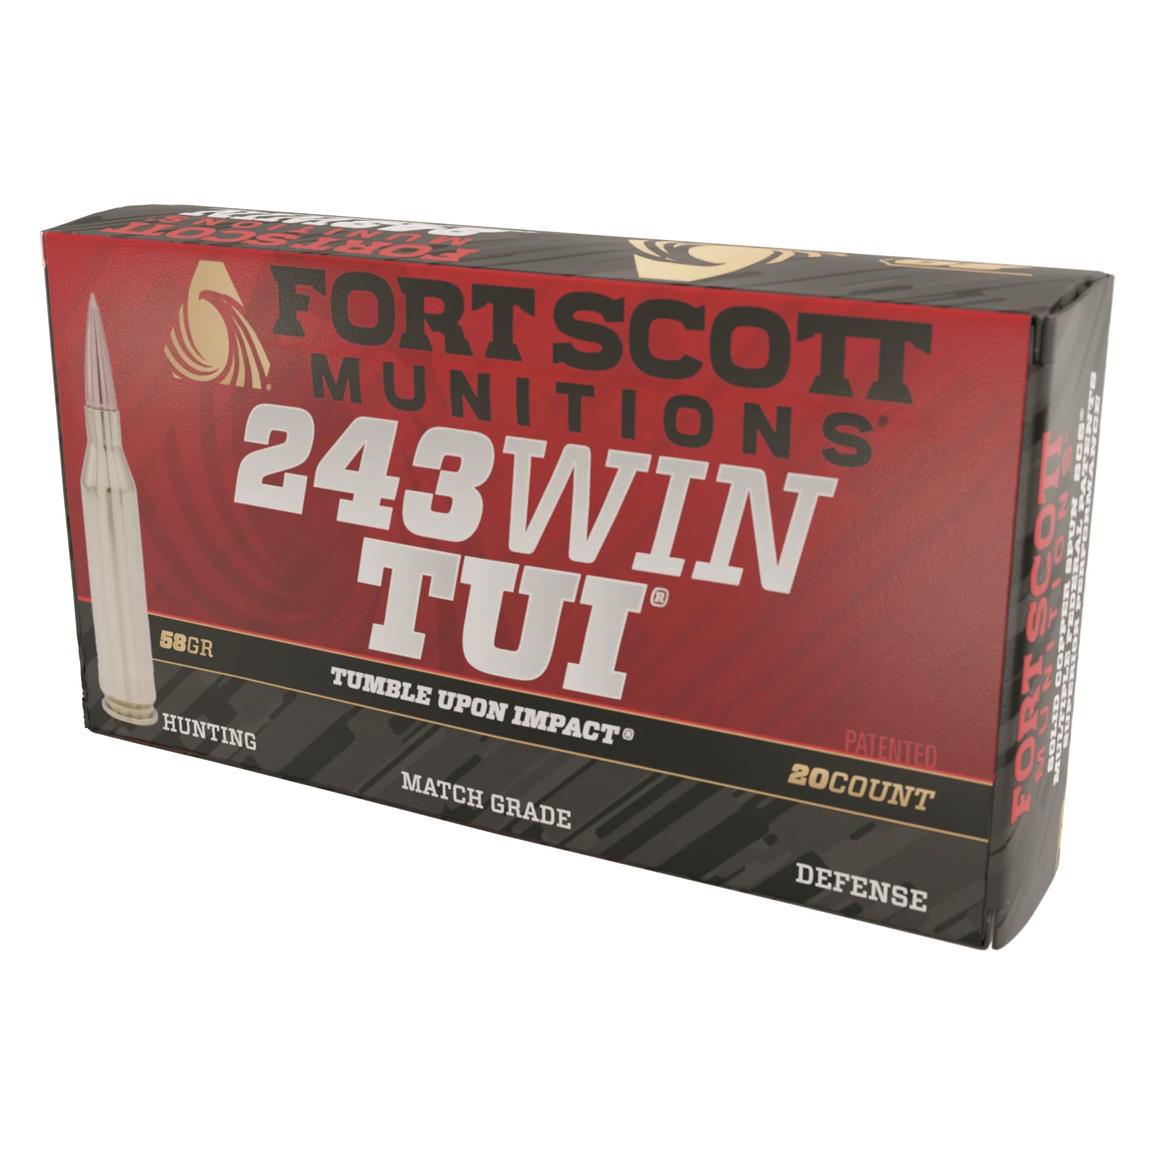 Fort Scott Tumble Upon Impact Ammo, .243 Win., SCS, 58 Grain, 20 Rounds